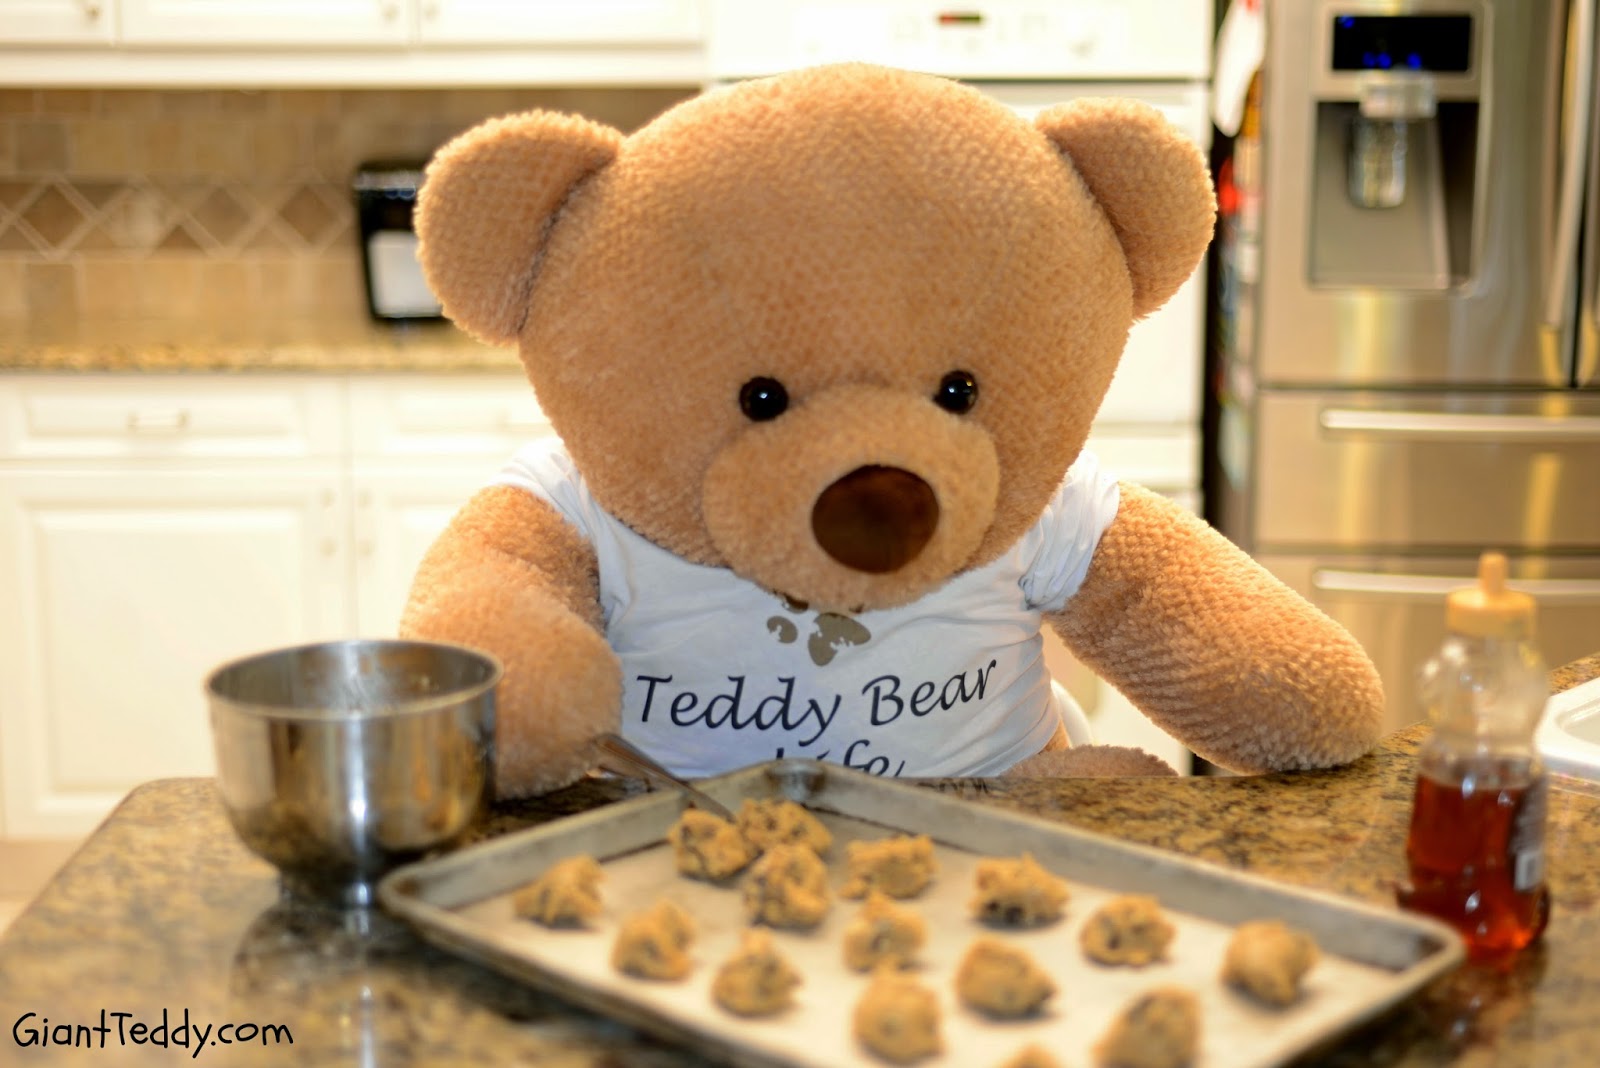 Big teddy bear making cookies